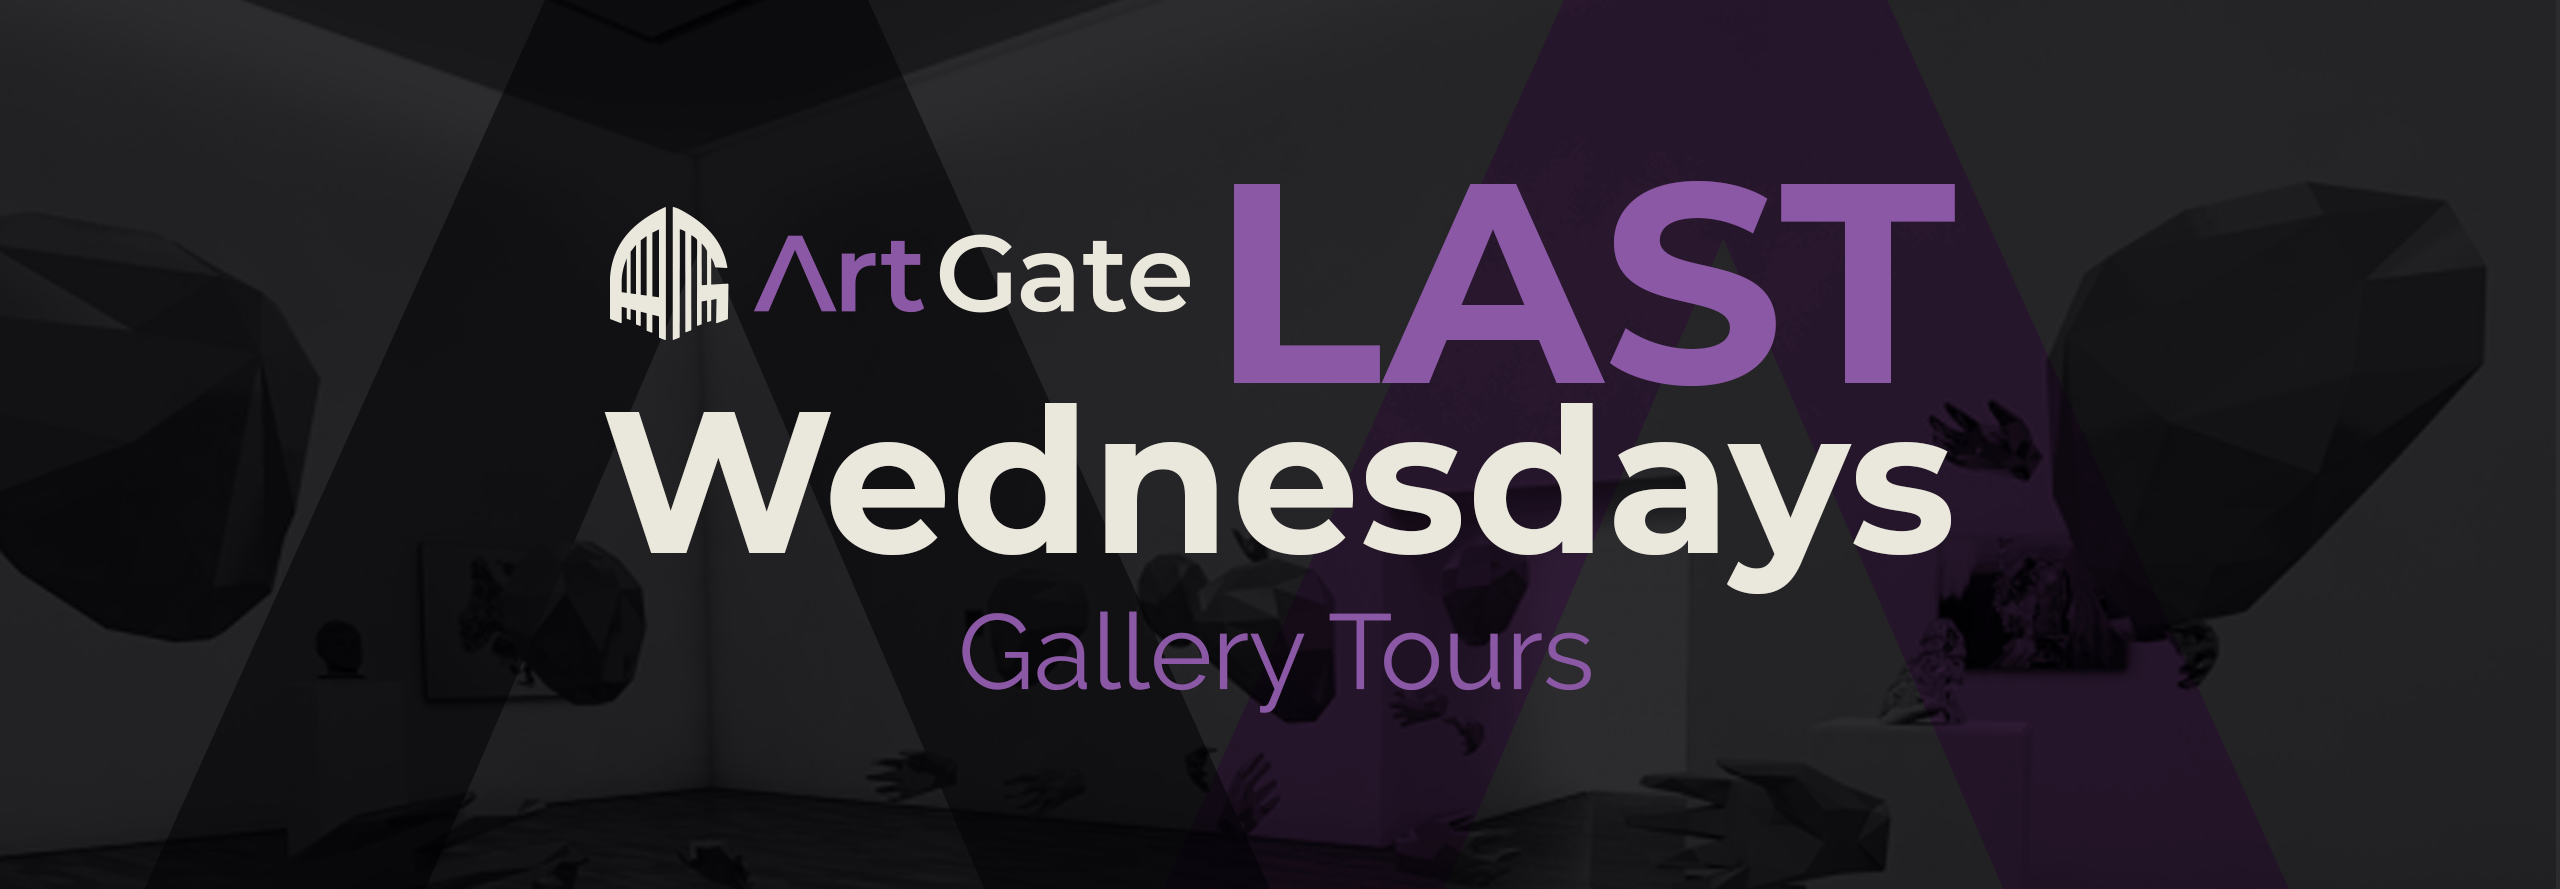 Art Gate Last Wednesdays Gallery Tours